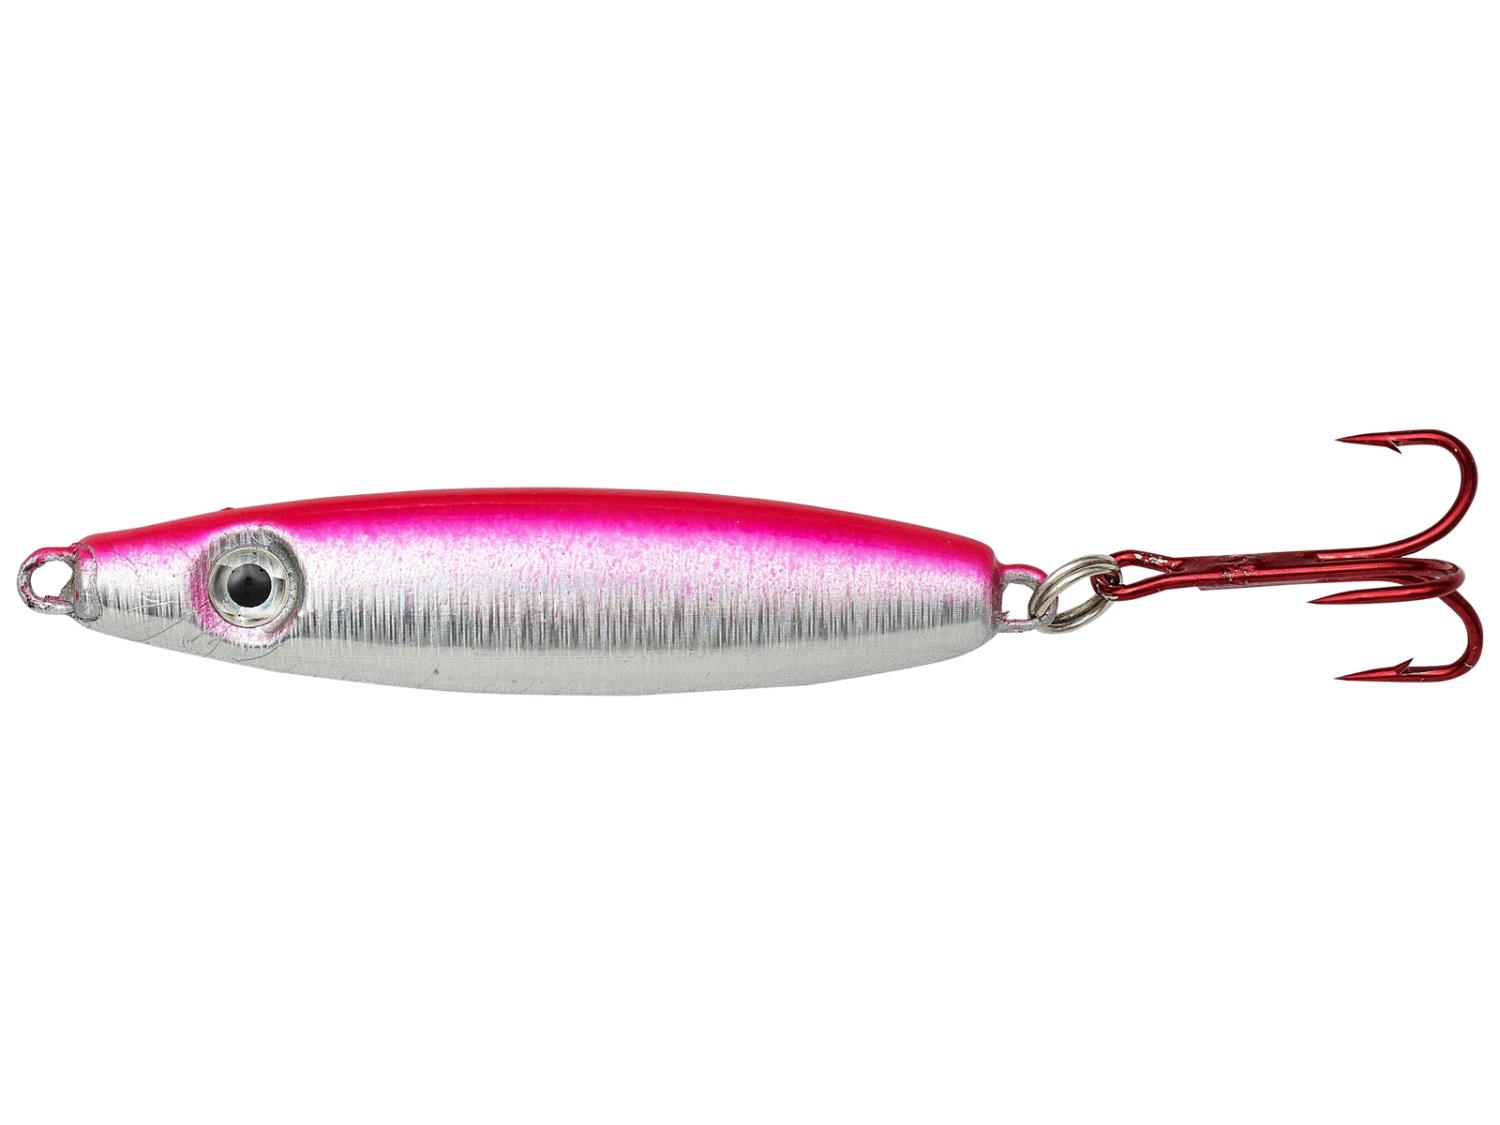 Kinetic Crazy herring 42g Pink/Crystal